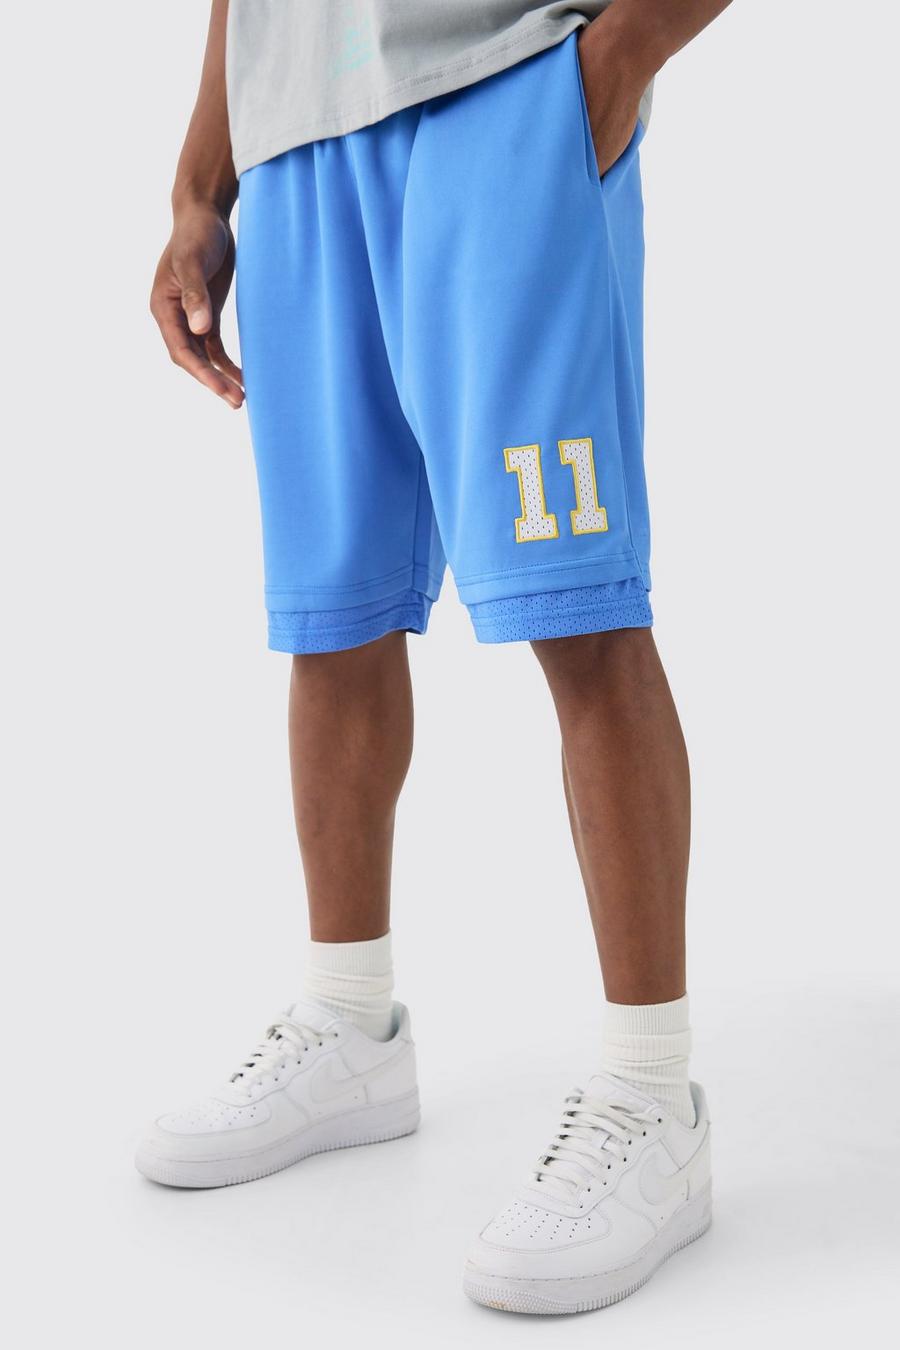 Loose Fit Bhm Satin Mesh Long Length Basketball Shorts, Blue